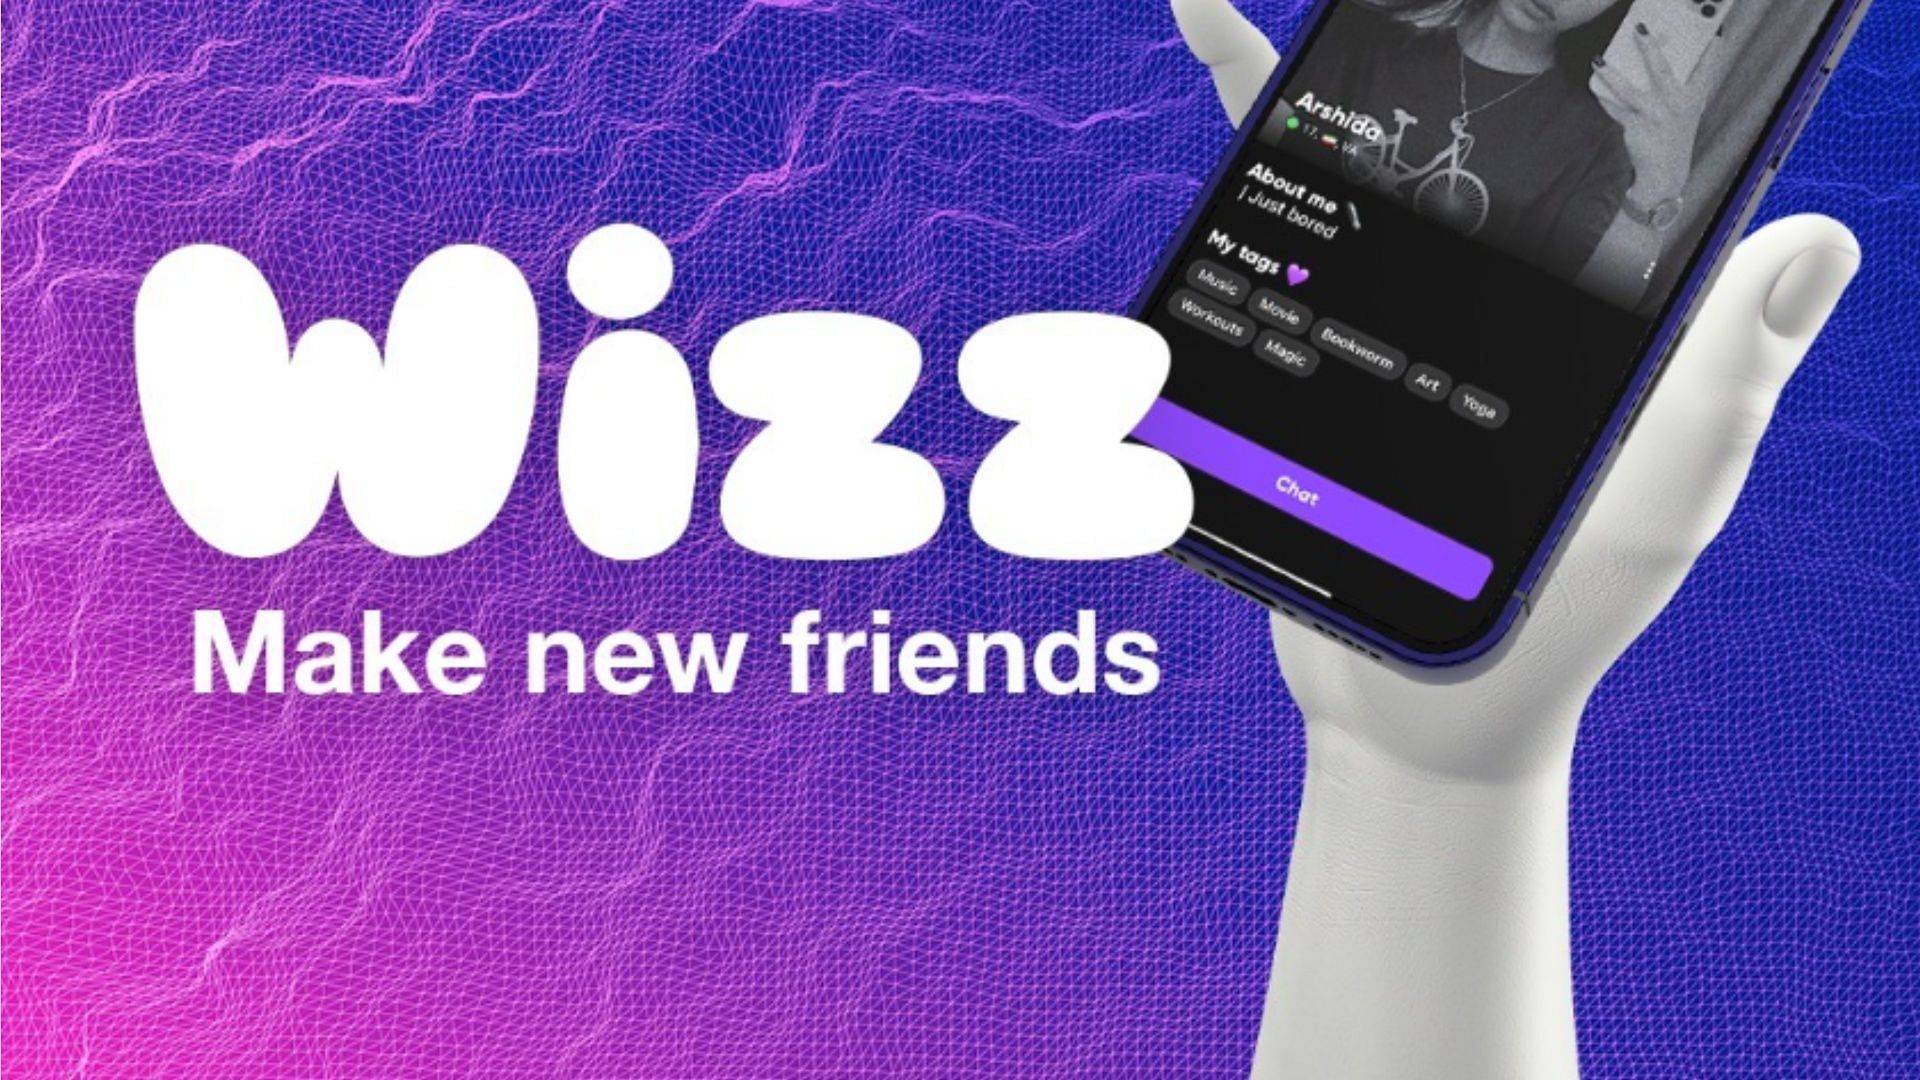 Wizz was launched in 2019. (Image via Instagram/wizz.app)